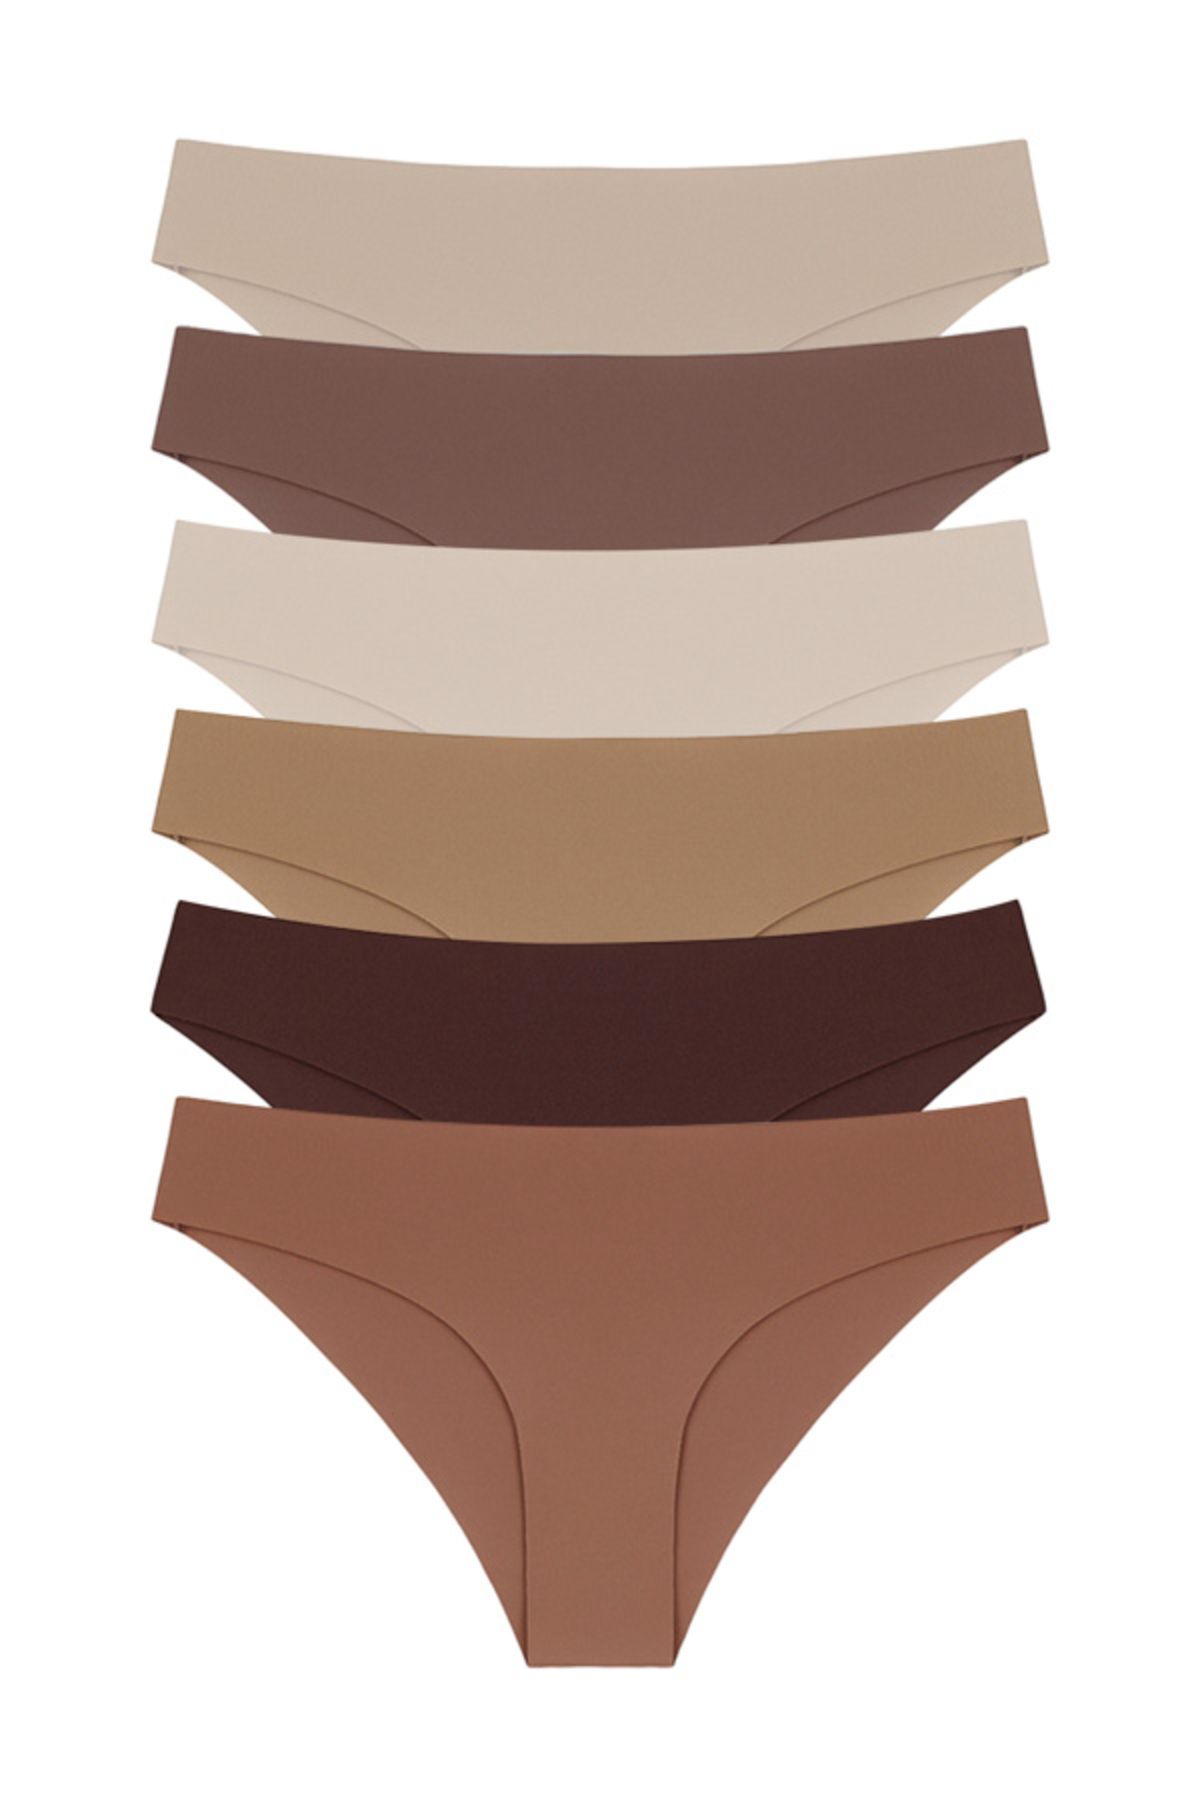 Cottonhill Lazer Kesim Kadın Bikini Külot 6'lı Paket